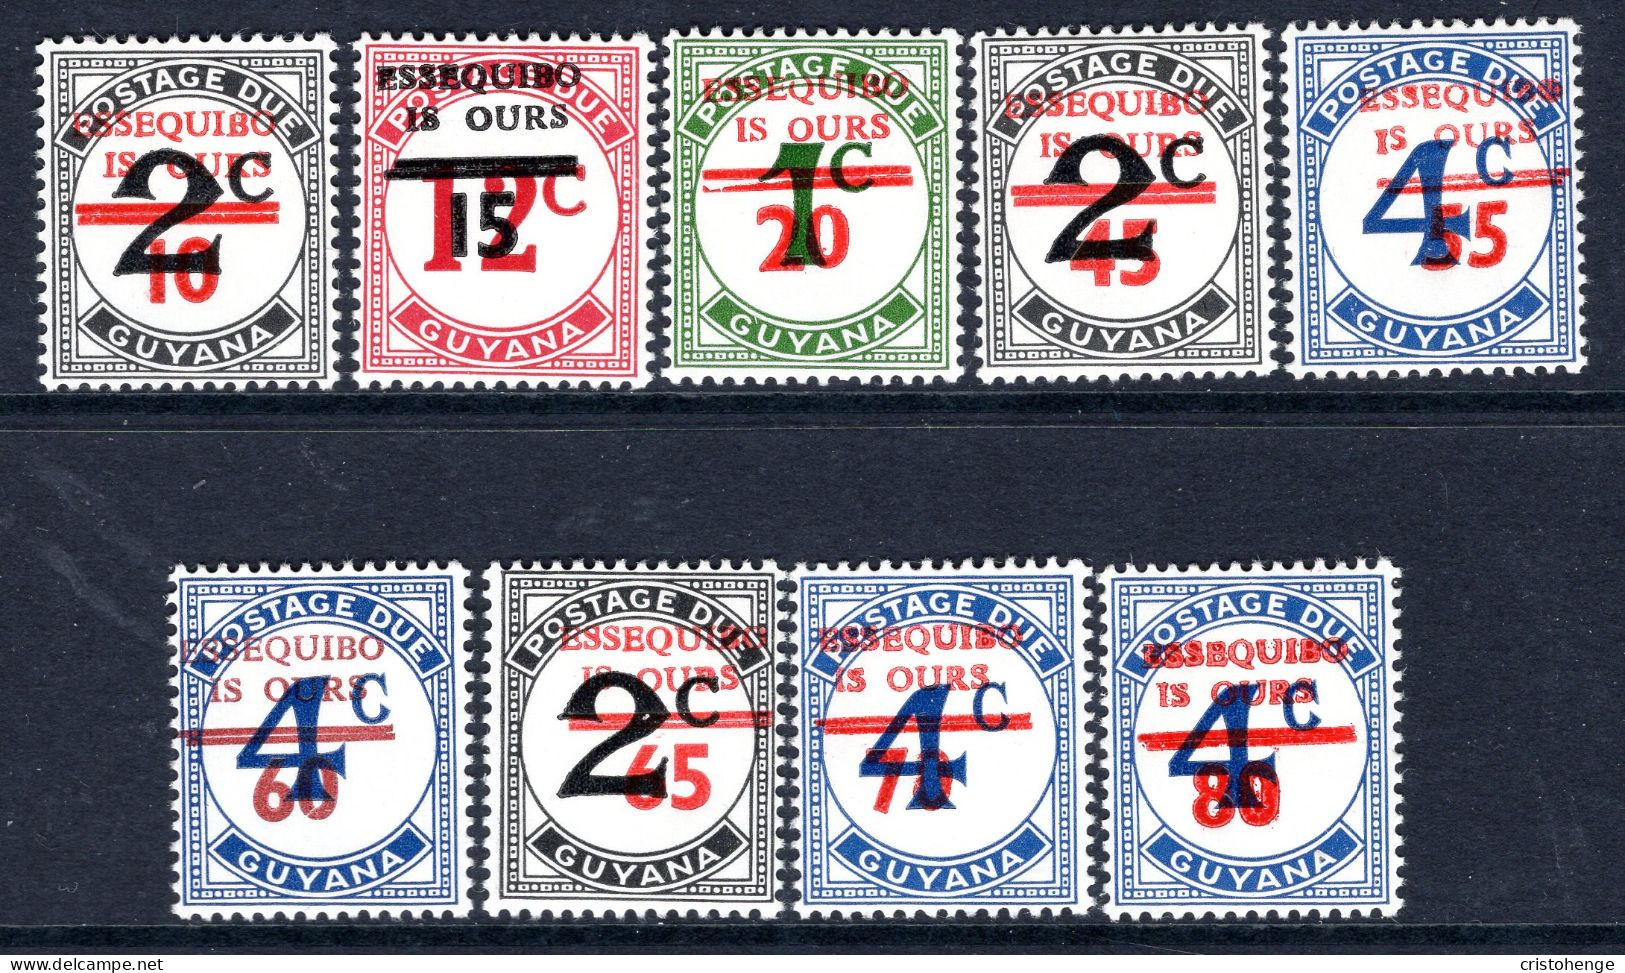 Guyana 1981 Postage Due Surcharges - Type II - Set HM (SG 782B-790B) - Guyane (1966-...)